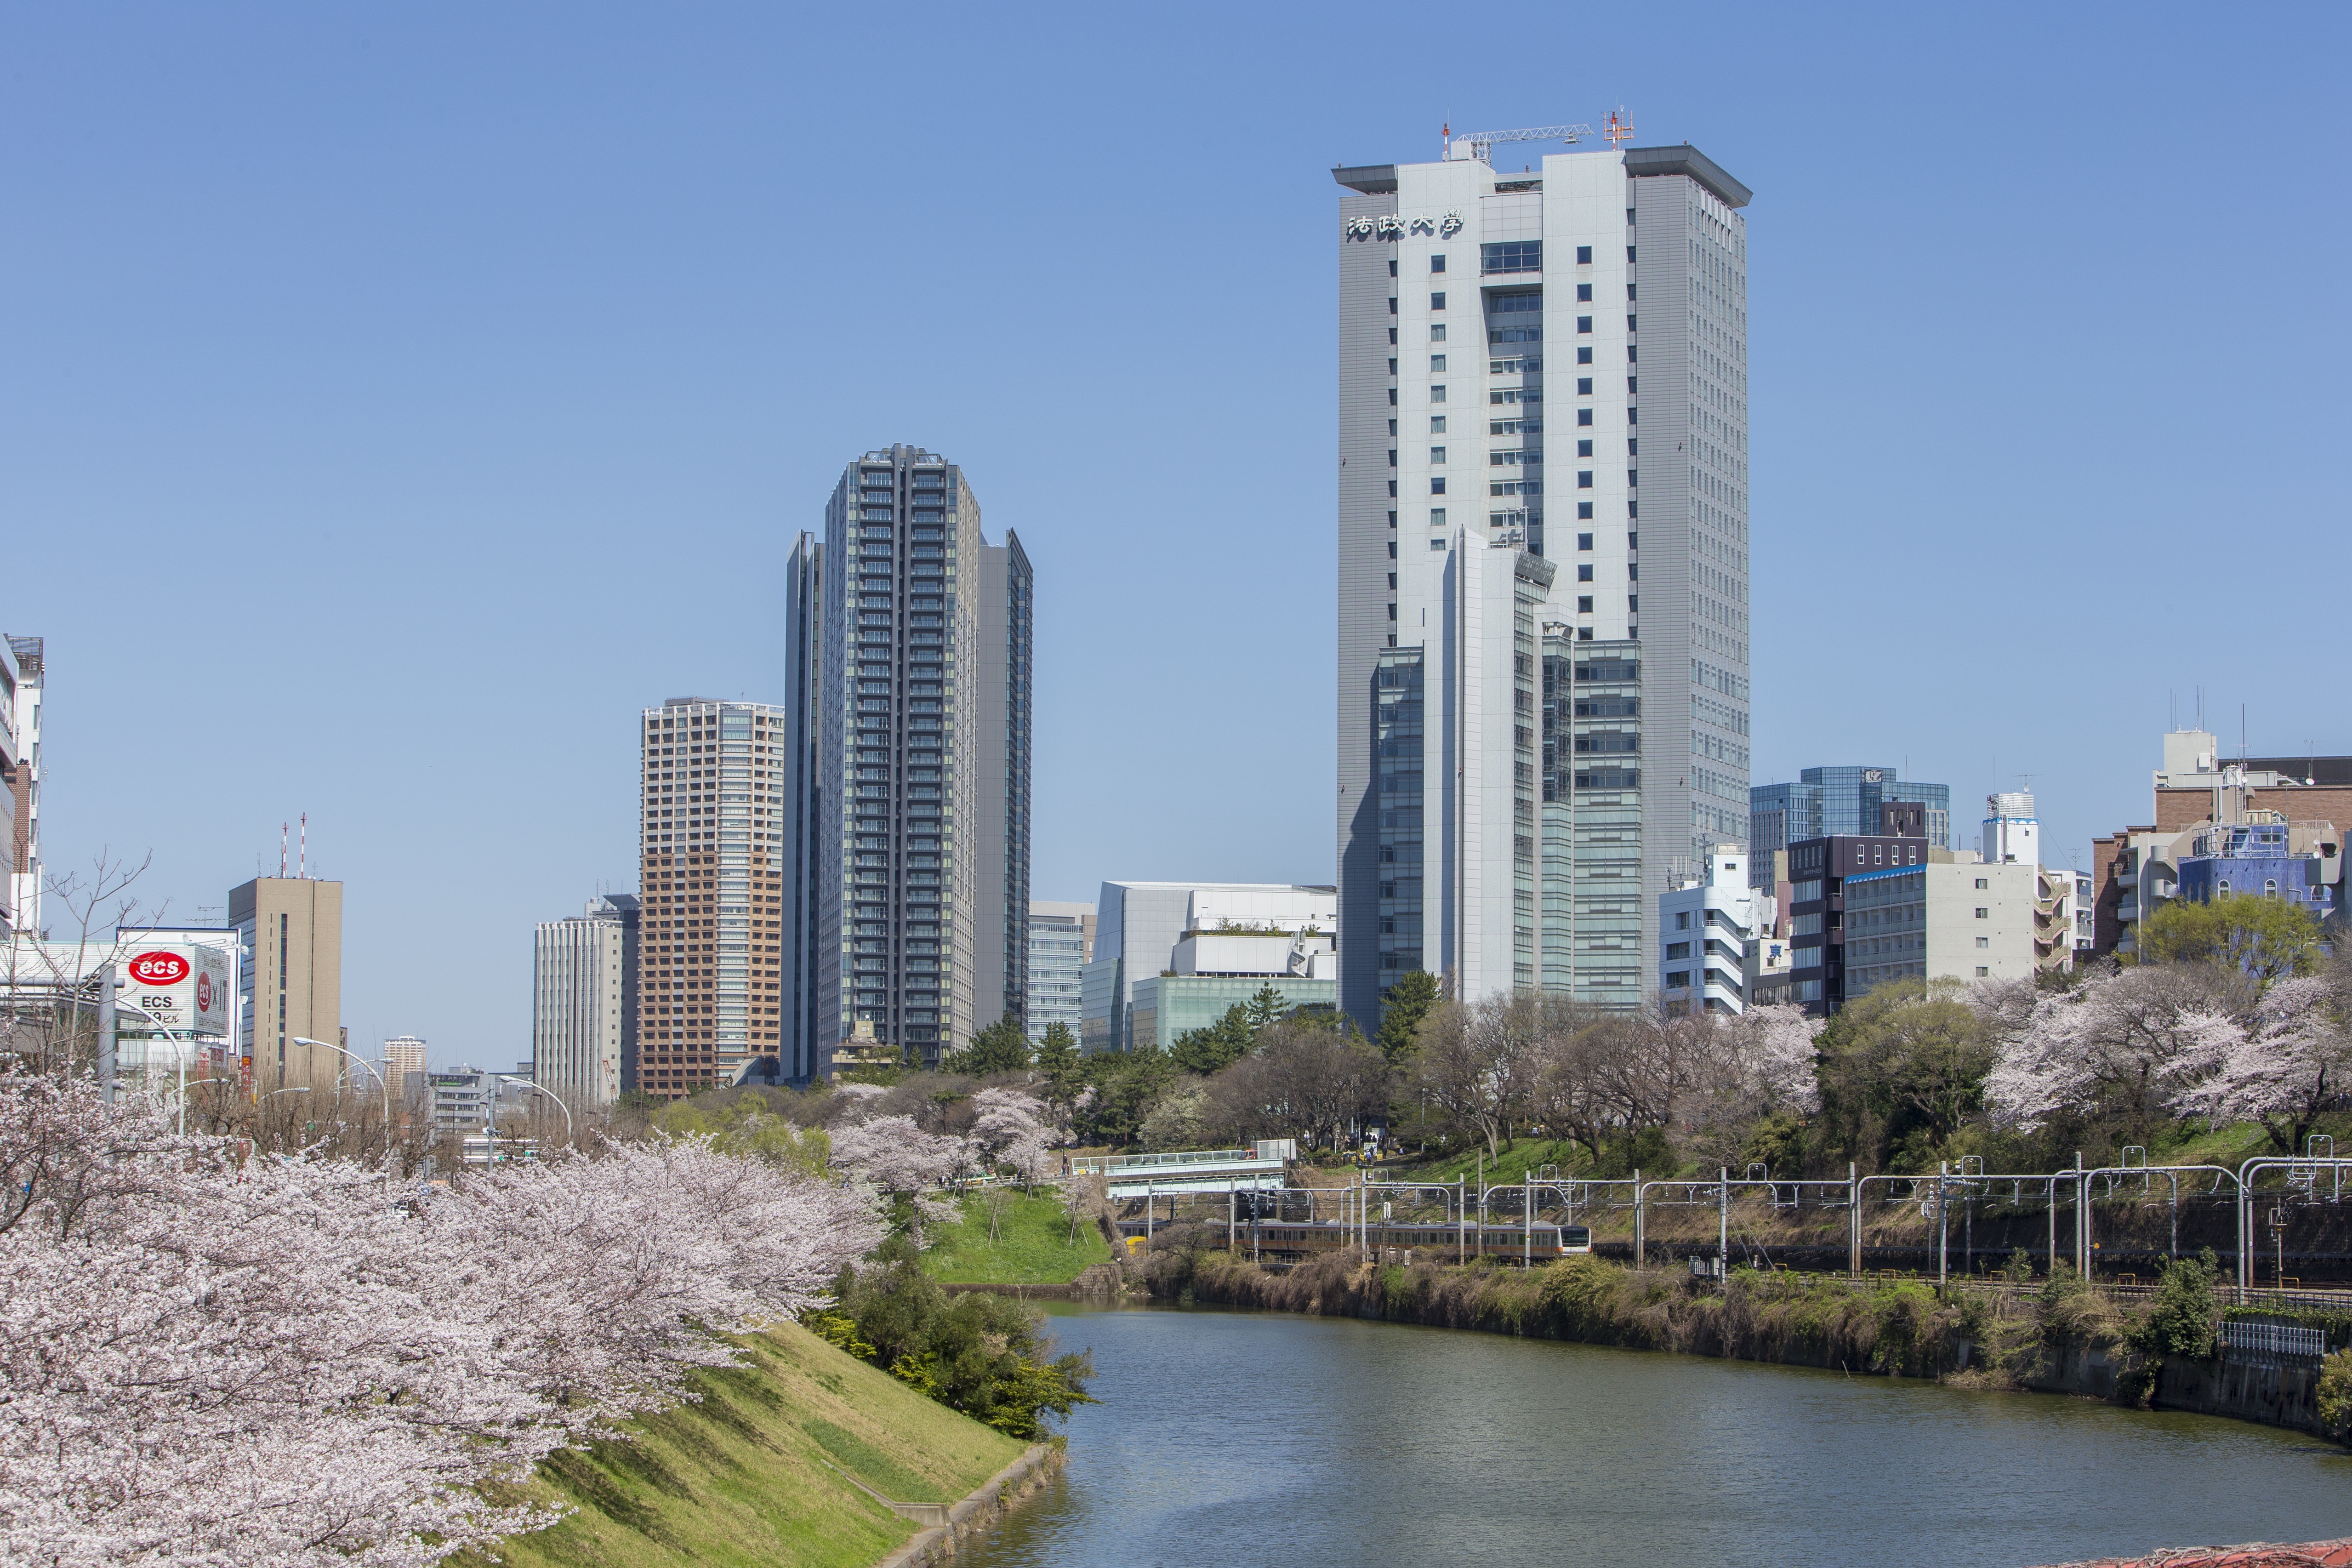 Hosei University campus with cherry blossom trees